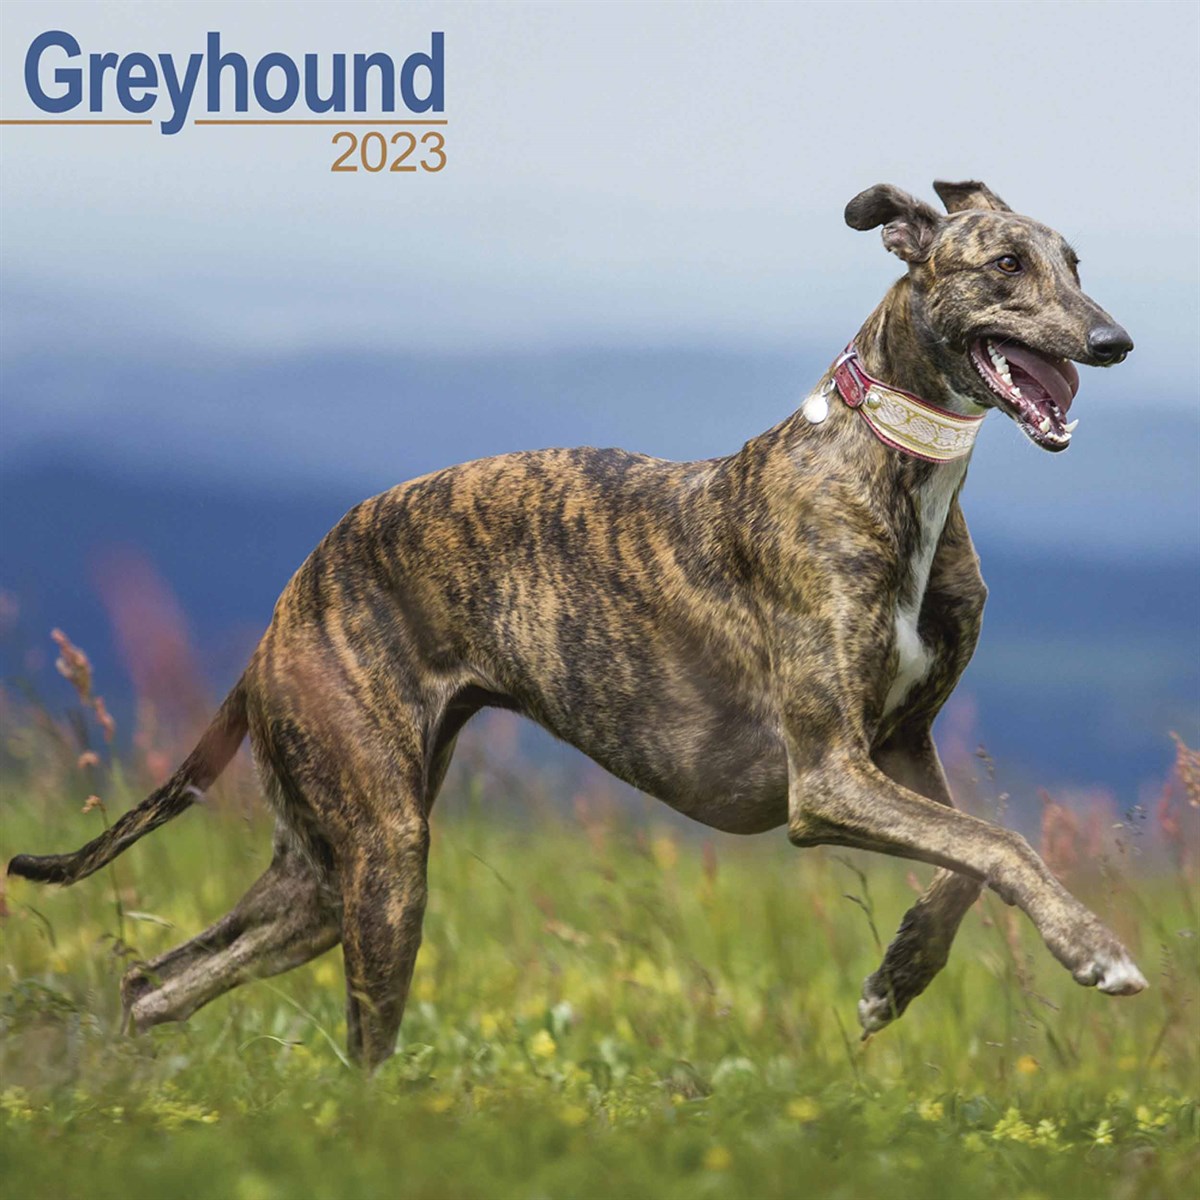 Greyhound 2023 Calendars